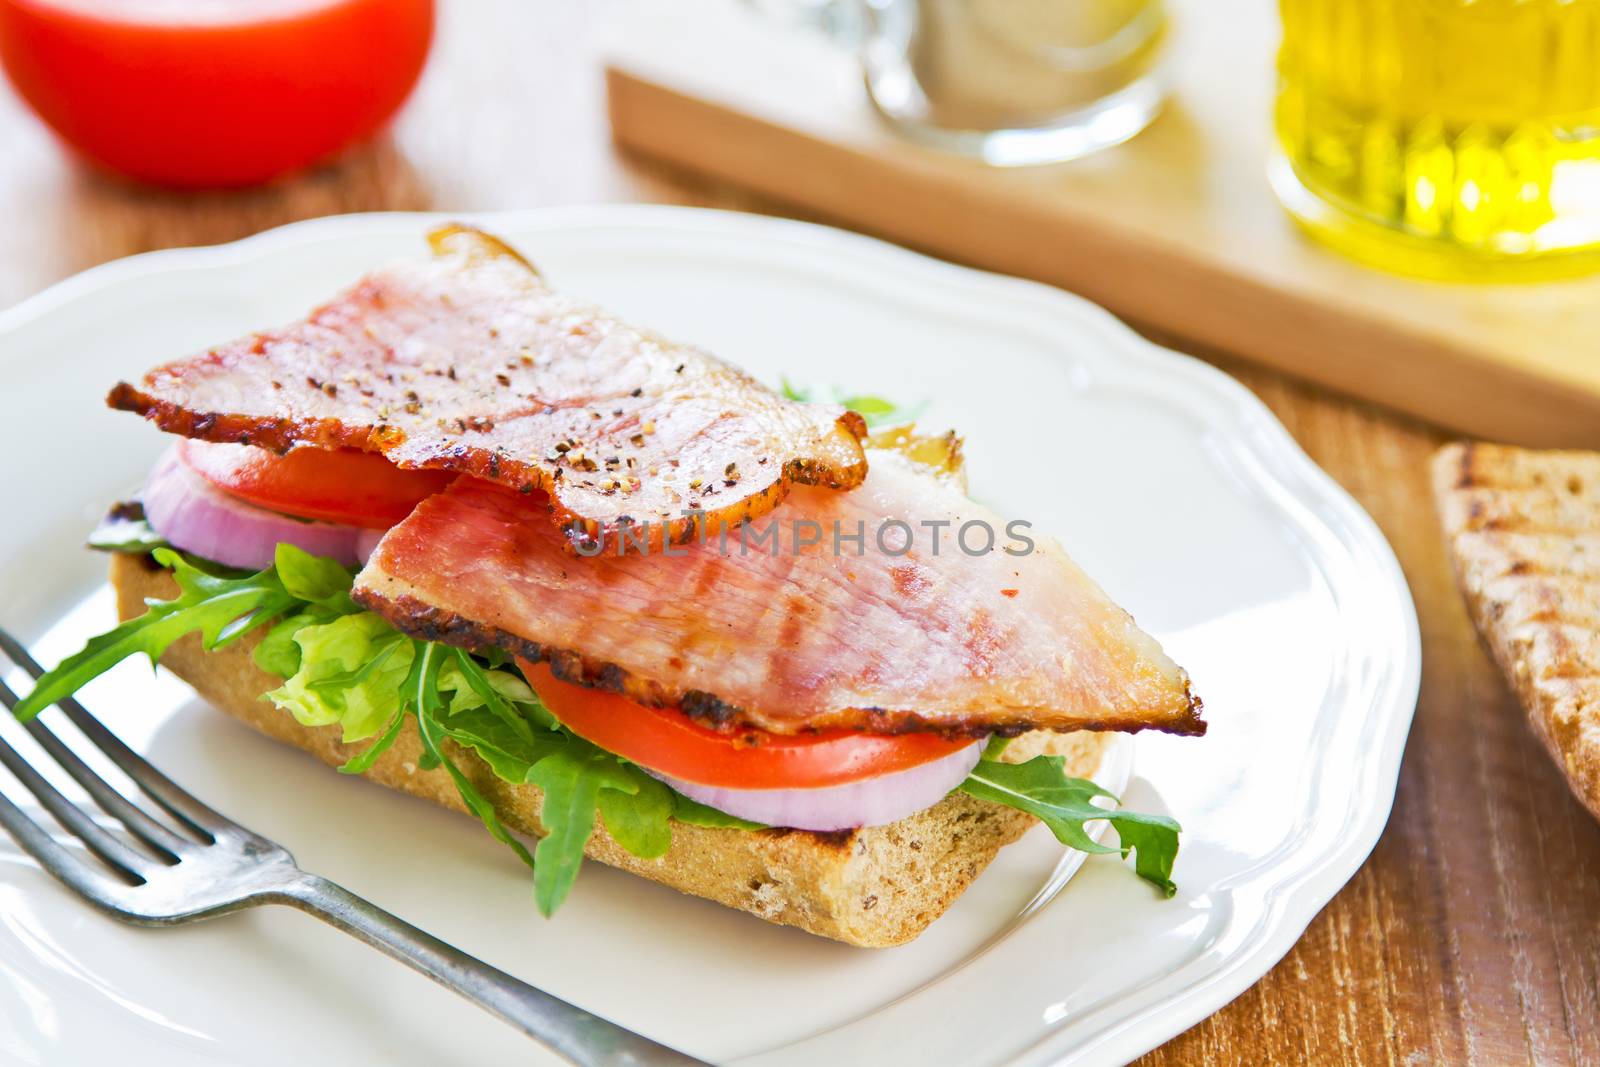 Grilled Ham on Rye baguette sandwich